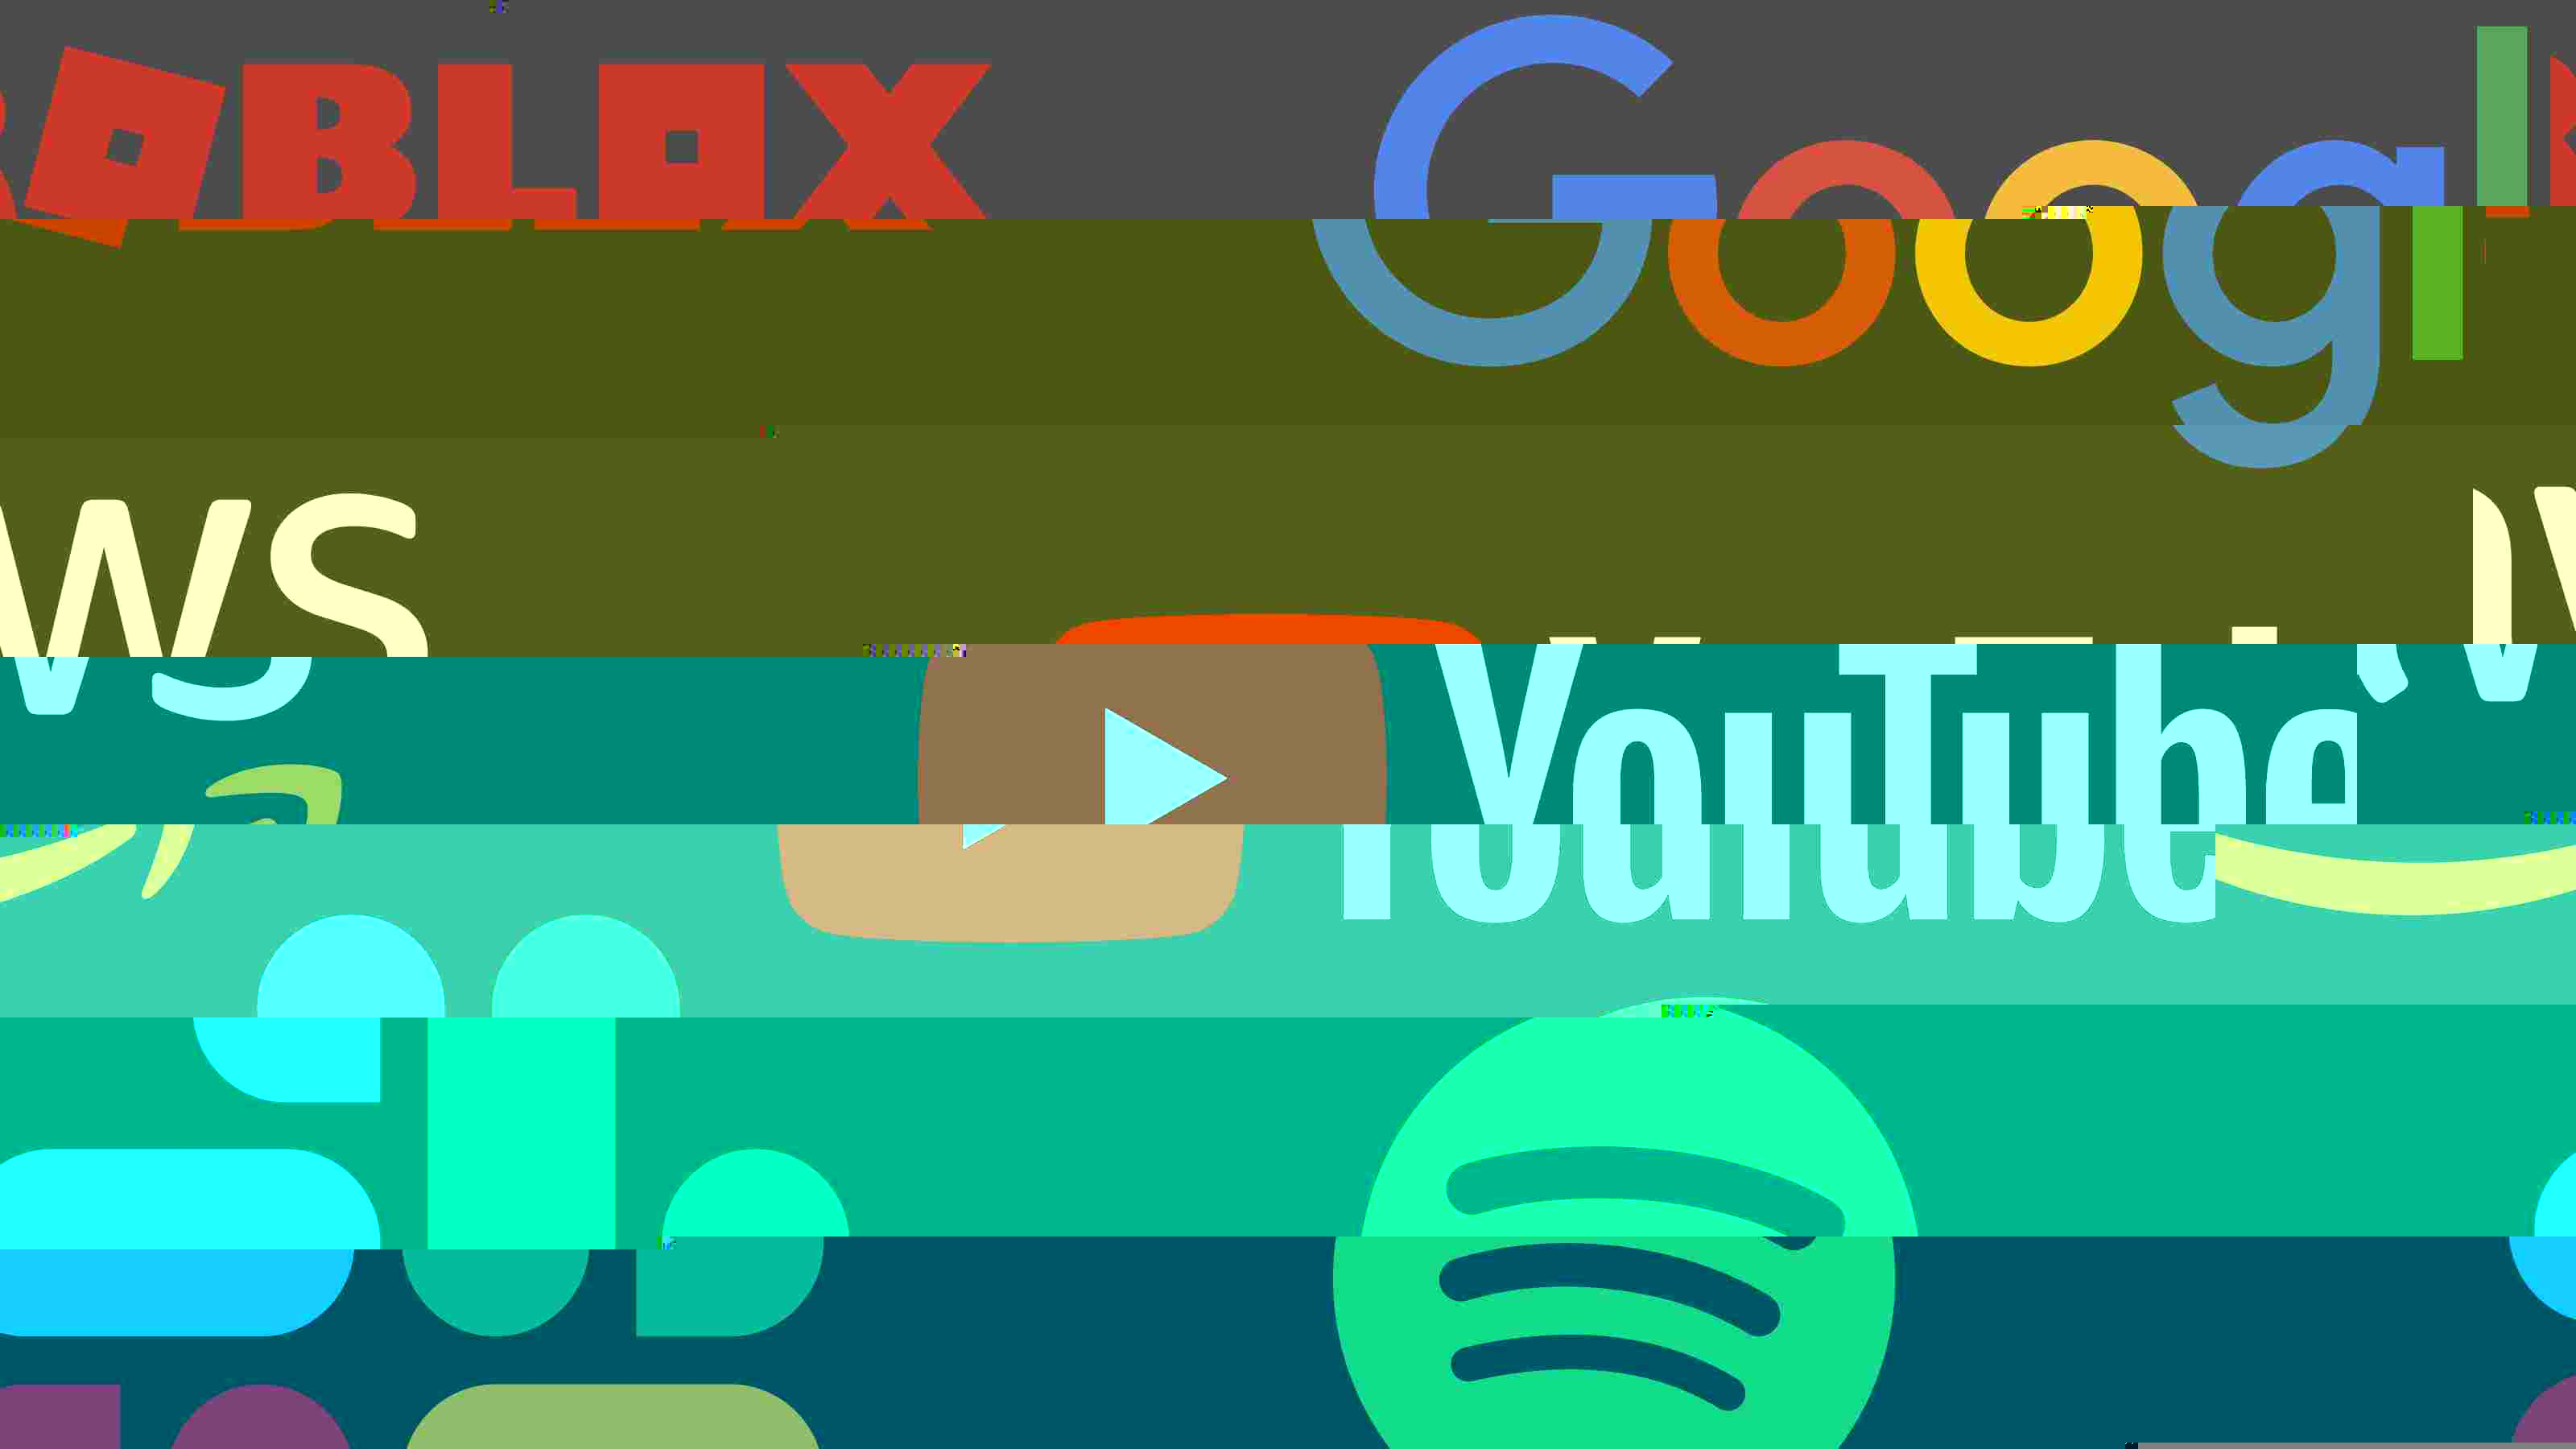 distorted logos like Roblox, Google, AWS, YouTube, Slack, Spotify